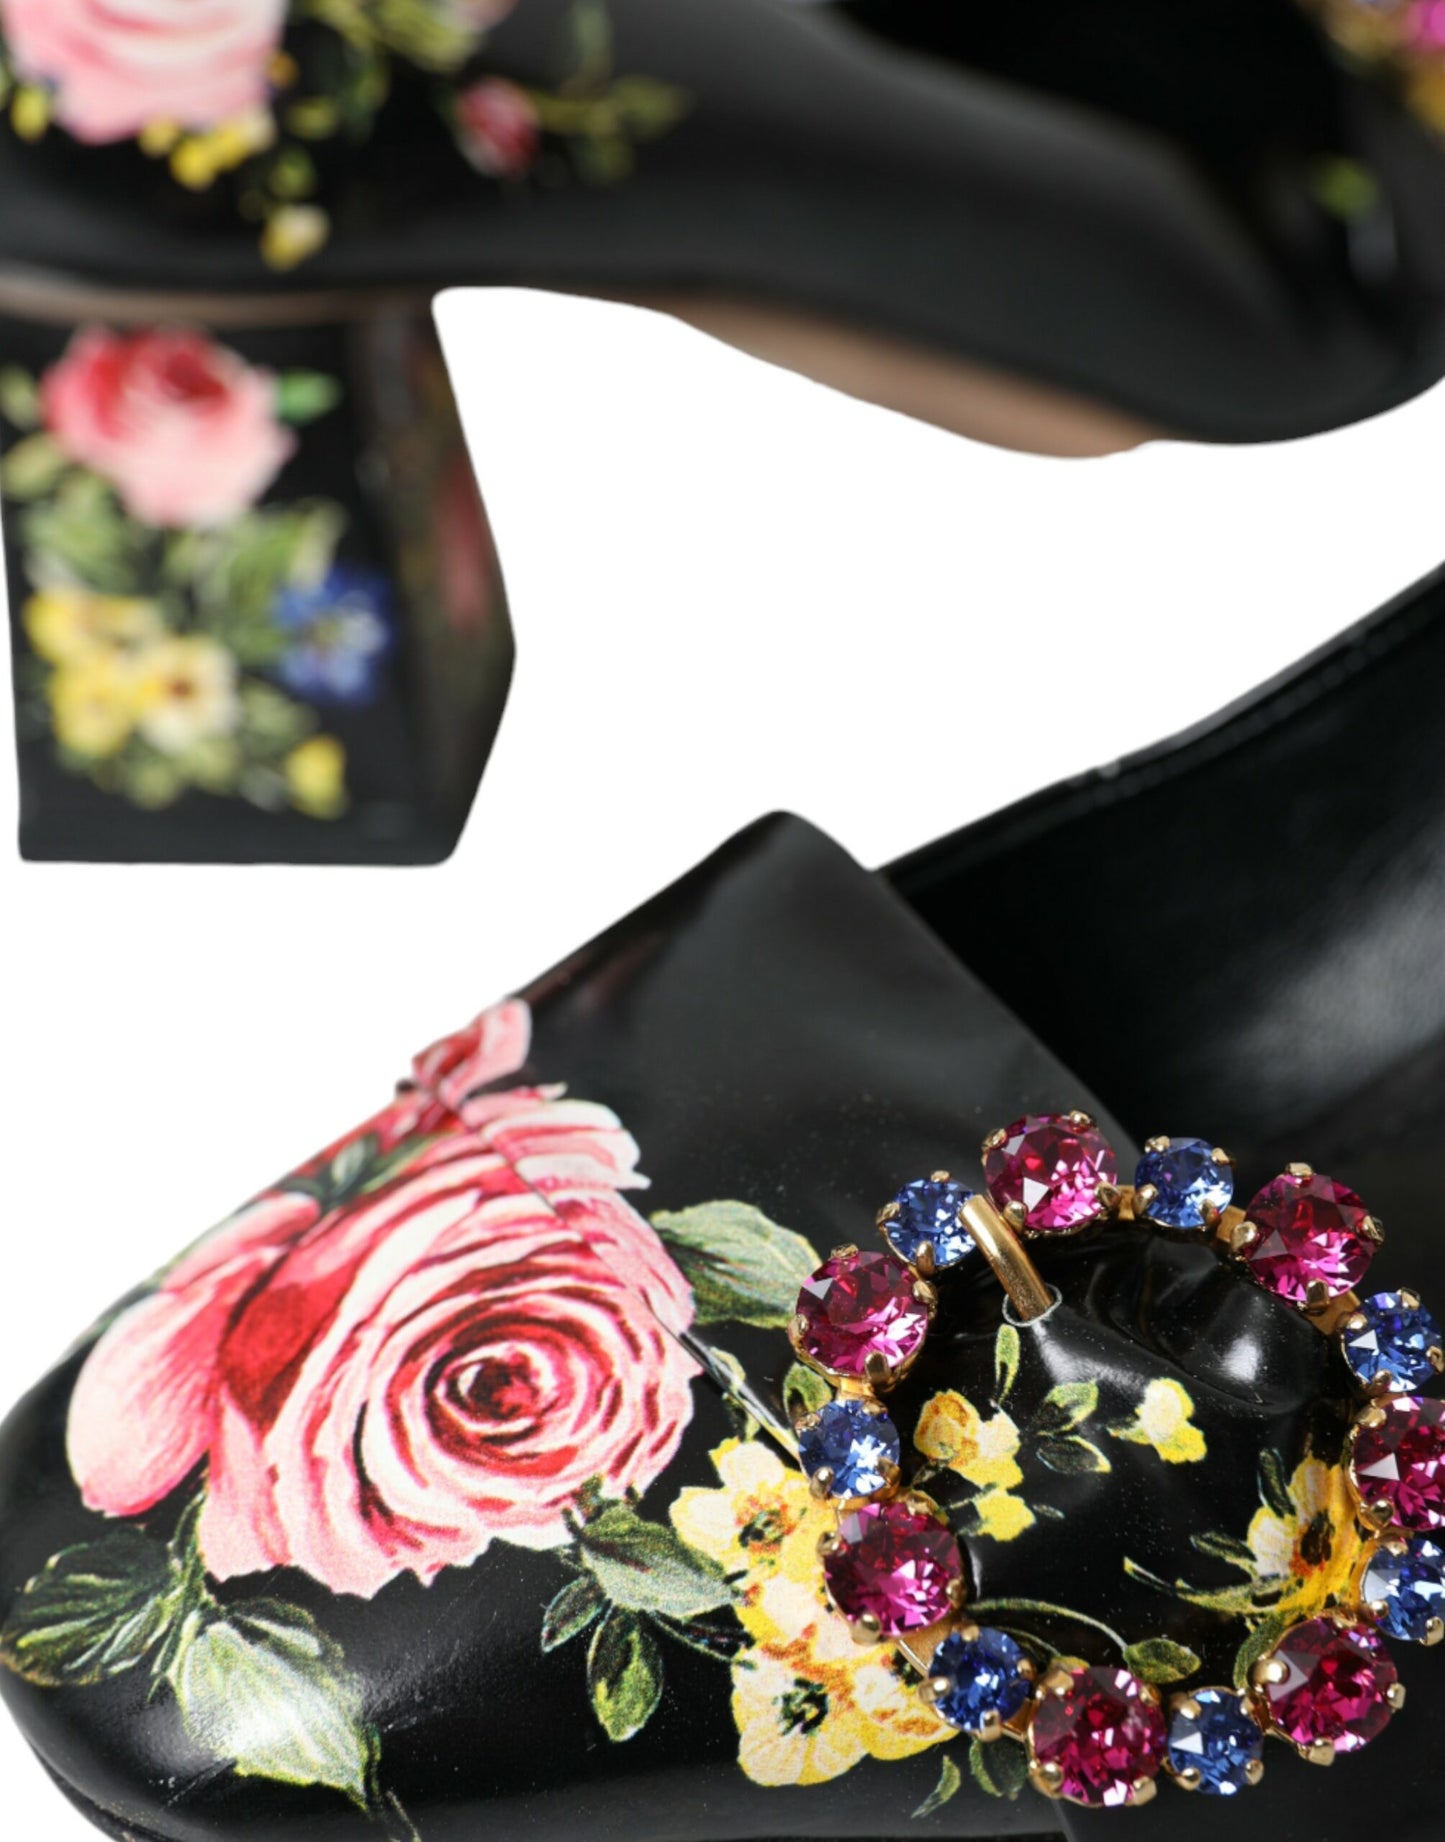 Dolce & Gabbana Black Floral Crystals Leather Pumps Shoes